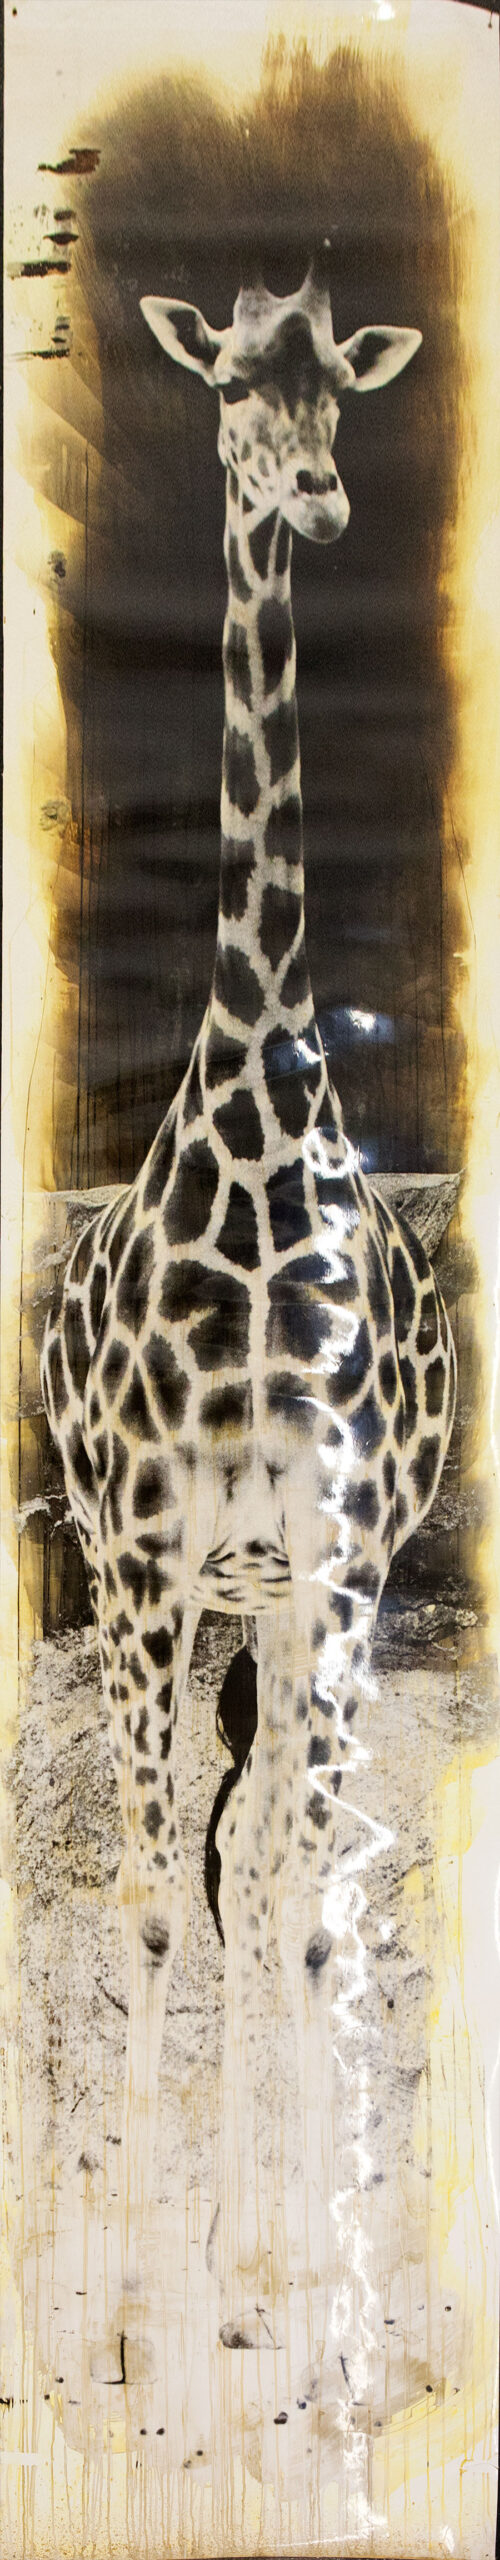 Giraffe.2.b